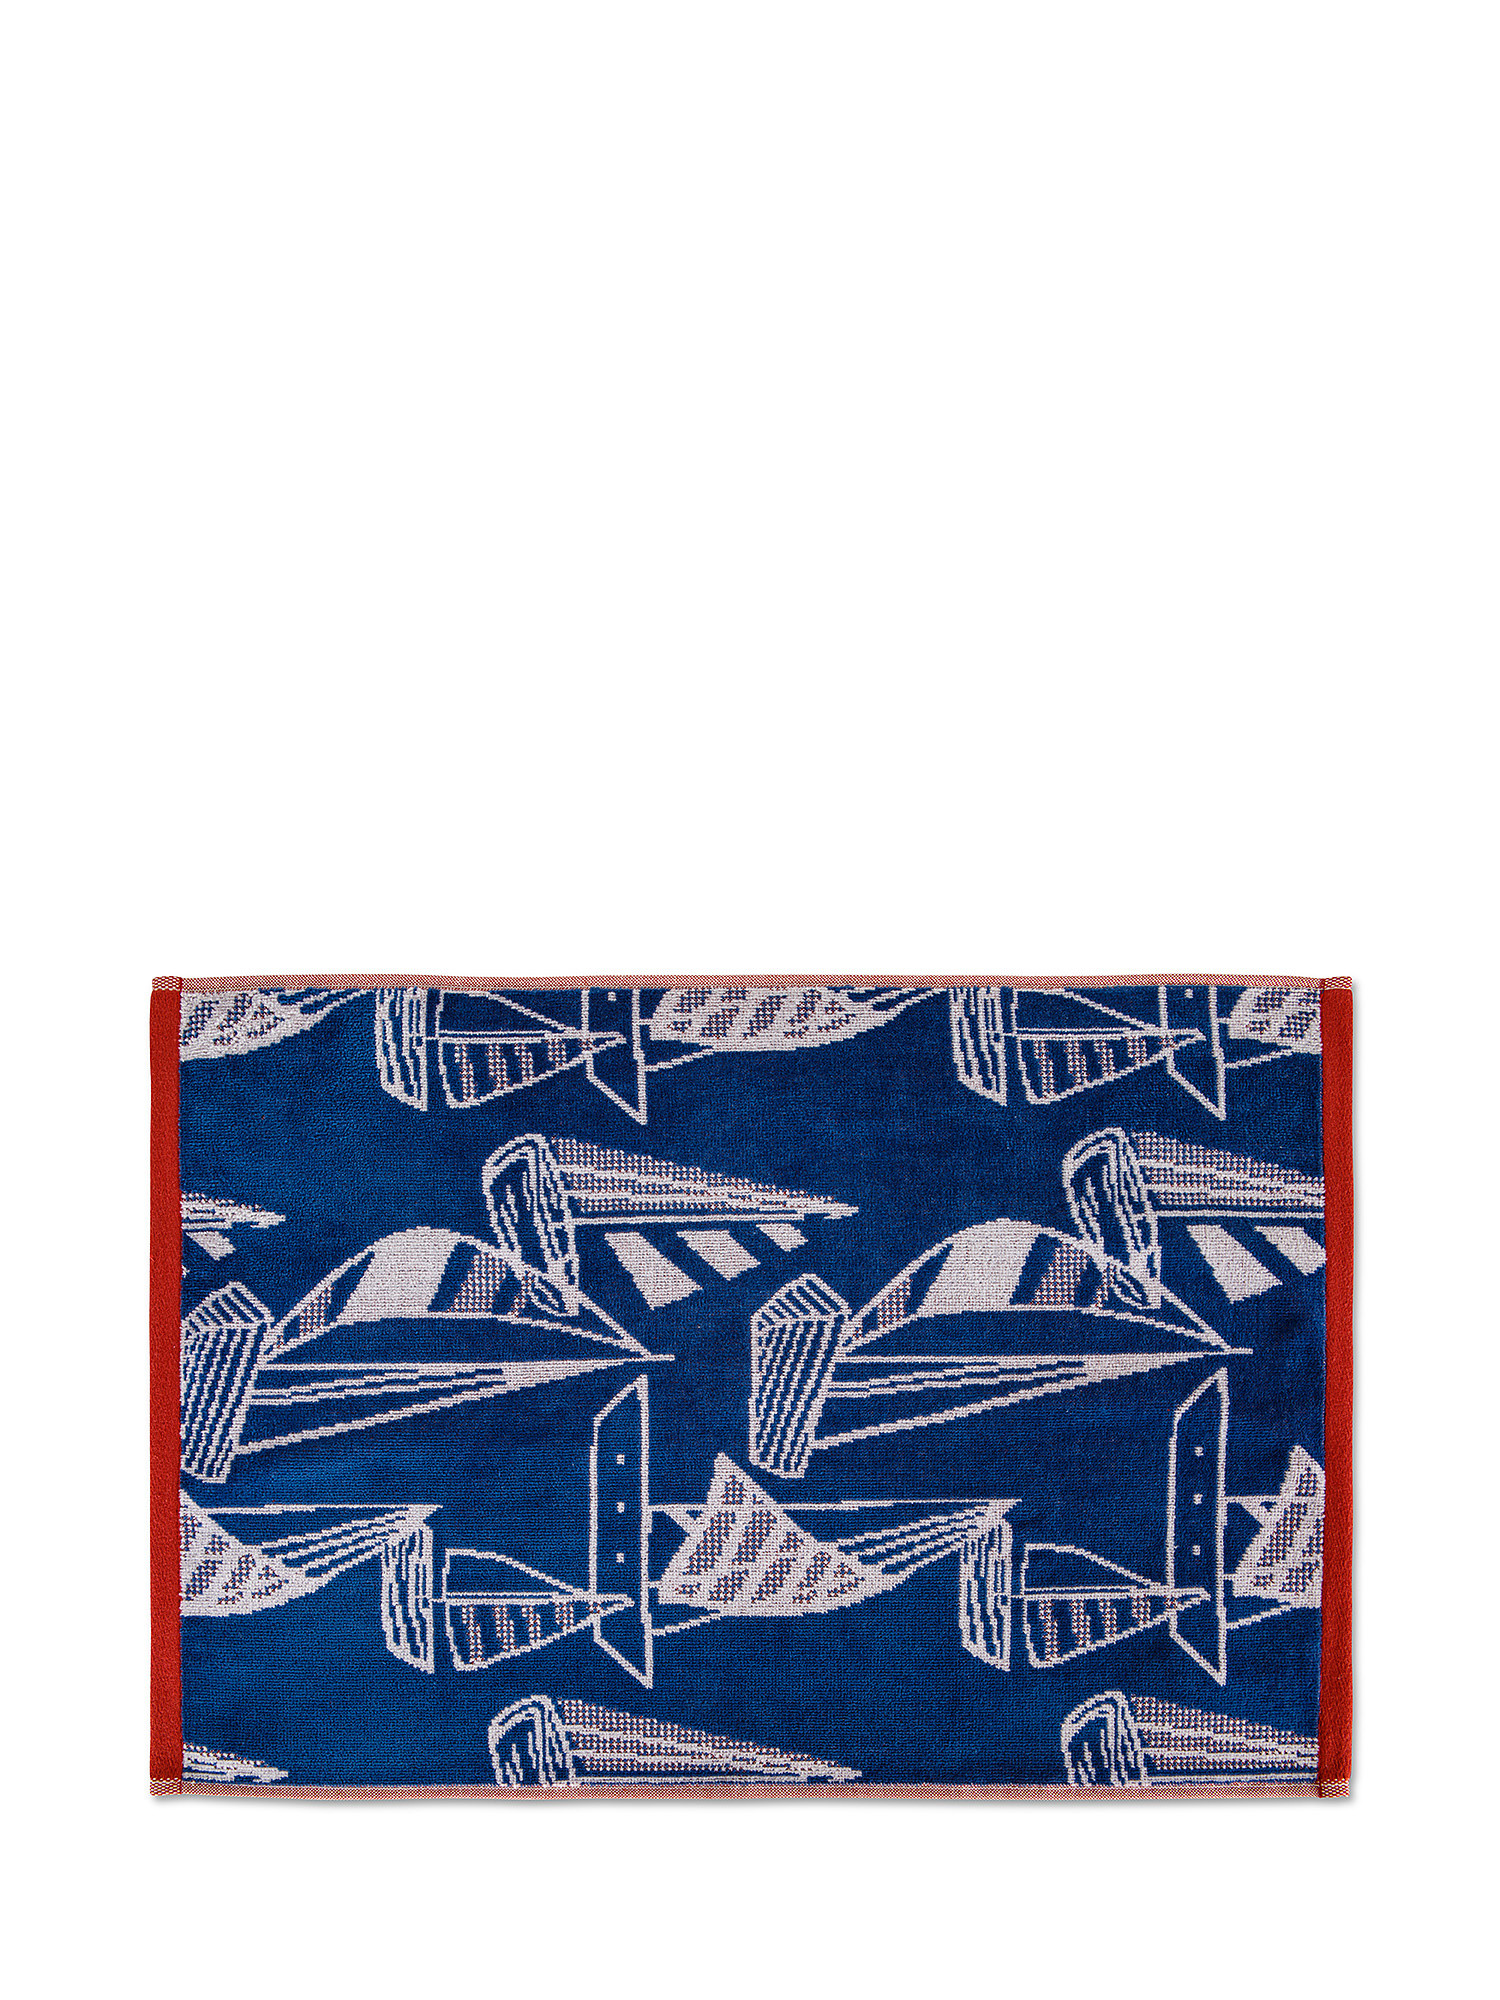 Asciugamano cotone velour motivo barche, Blu, large image number 1